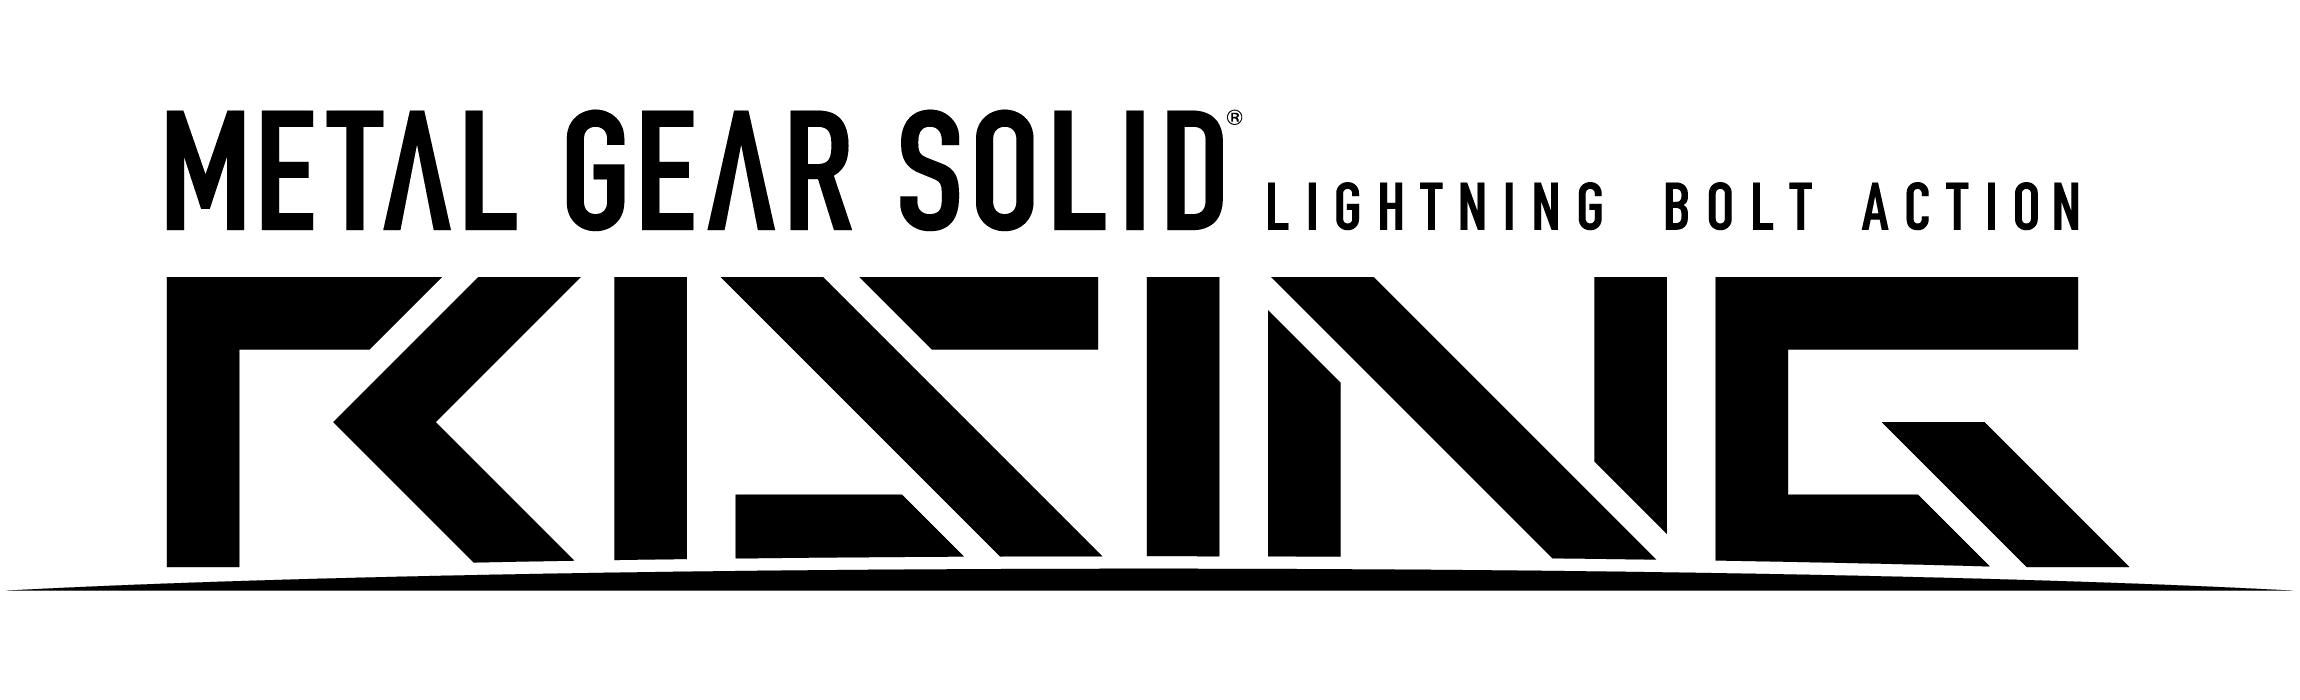 Logo Metal Gear Free Clipart HD PNG Image